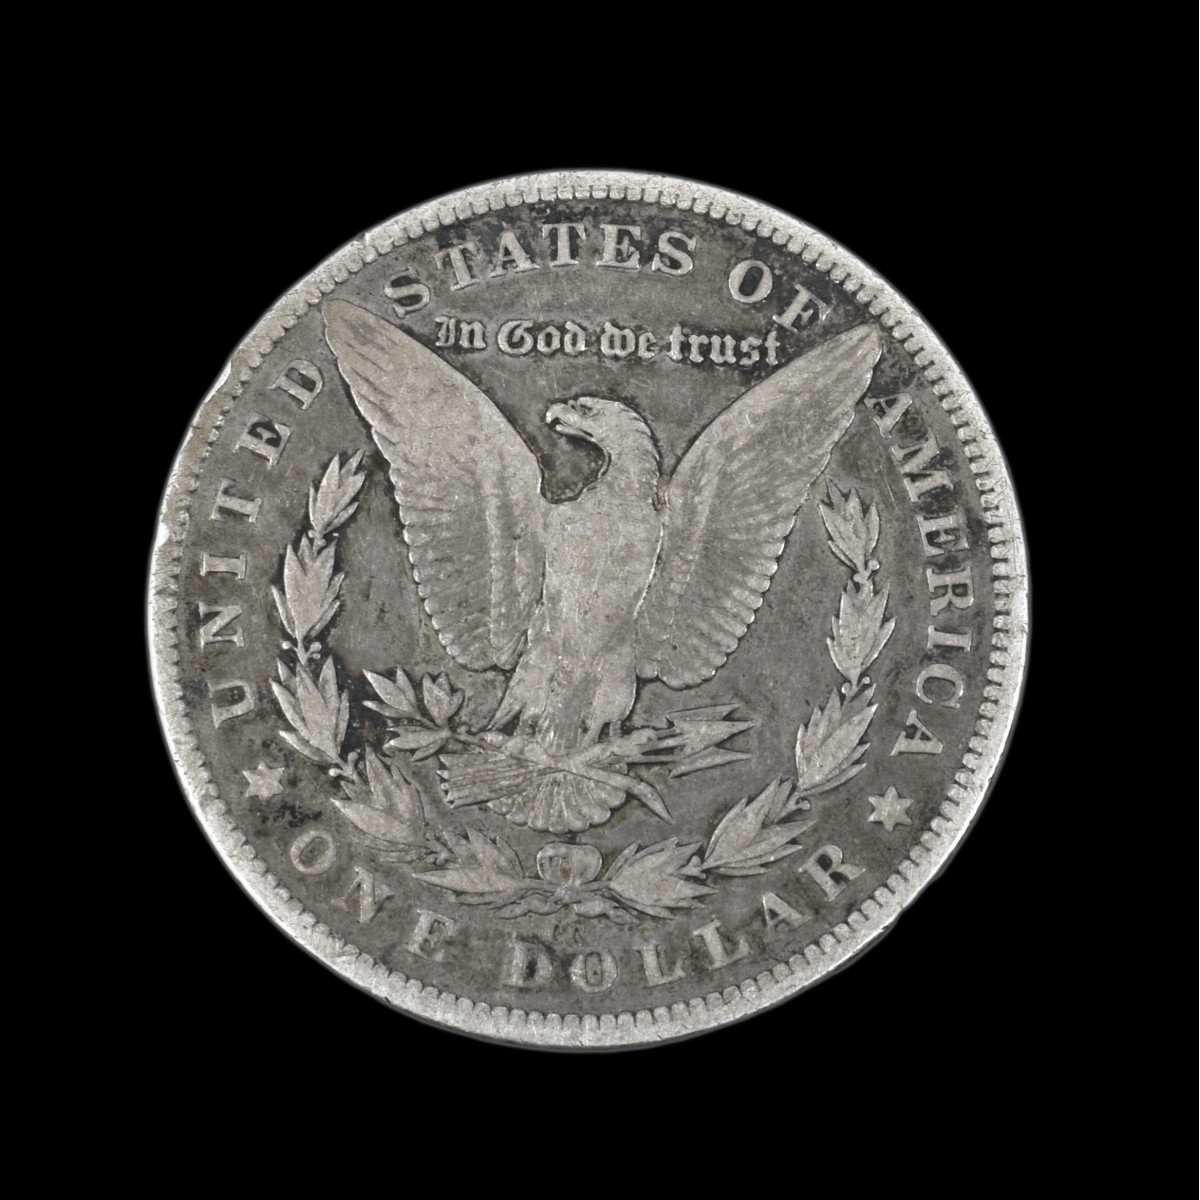 Ten U.S. Morgan Silver Dollars.